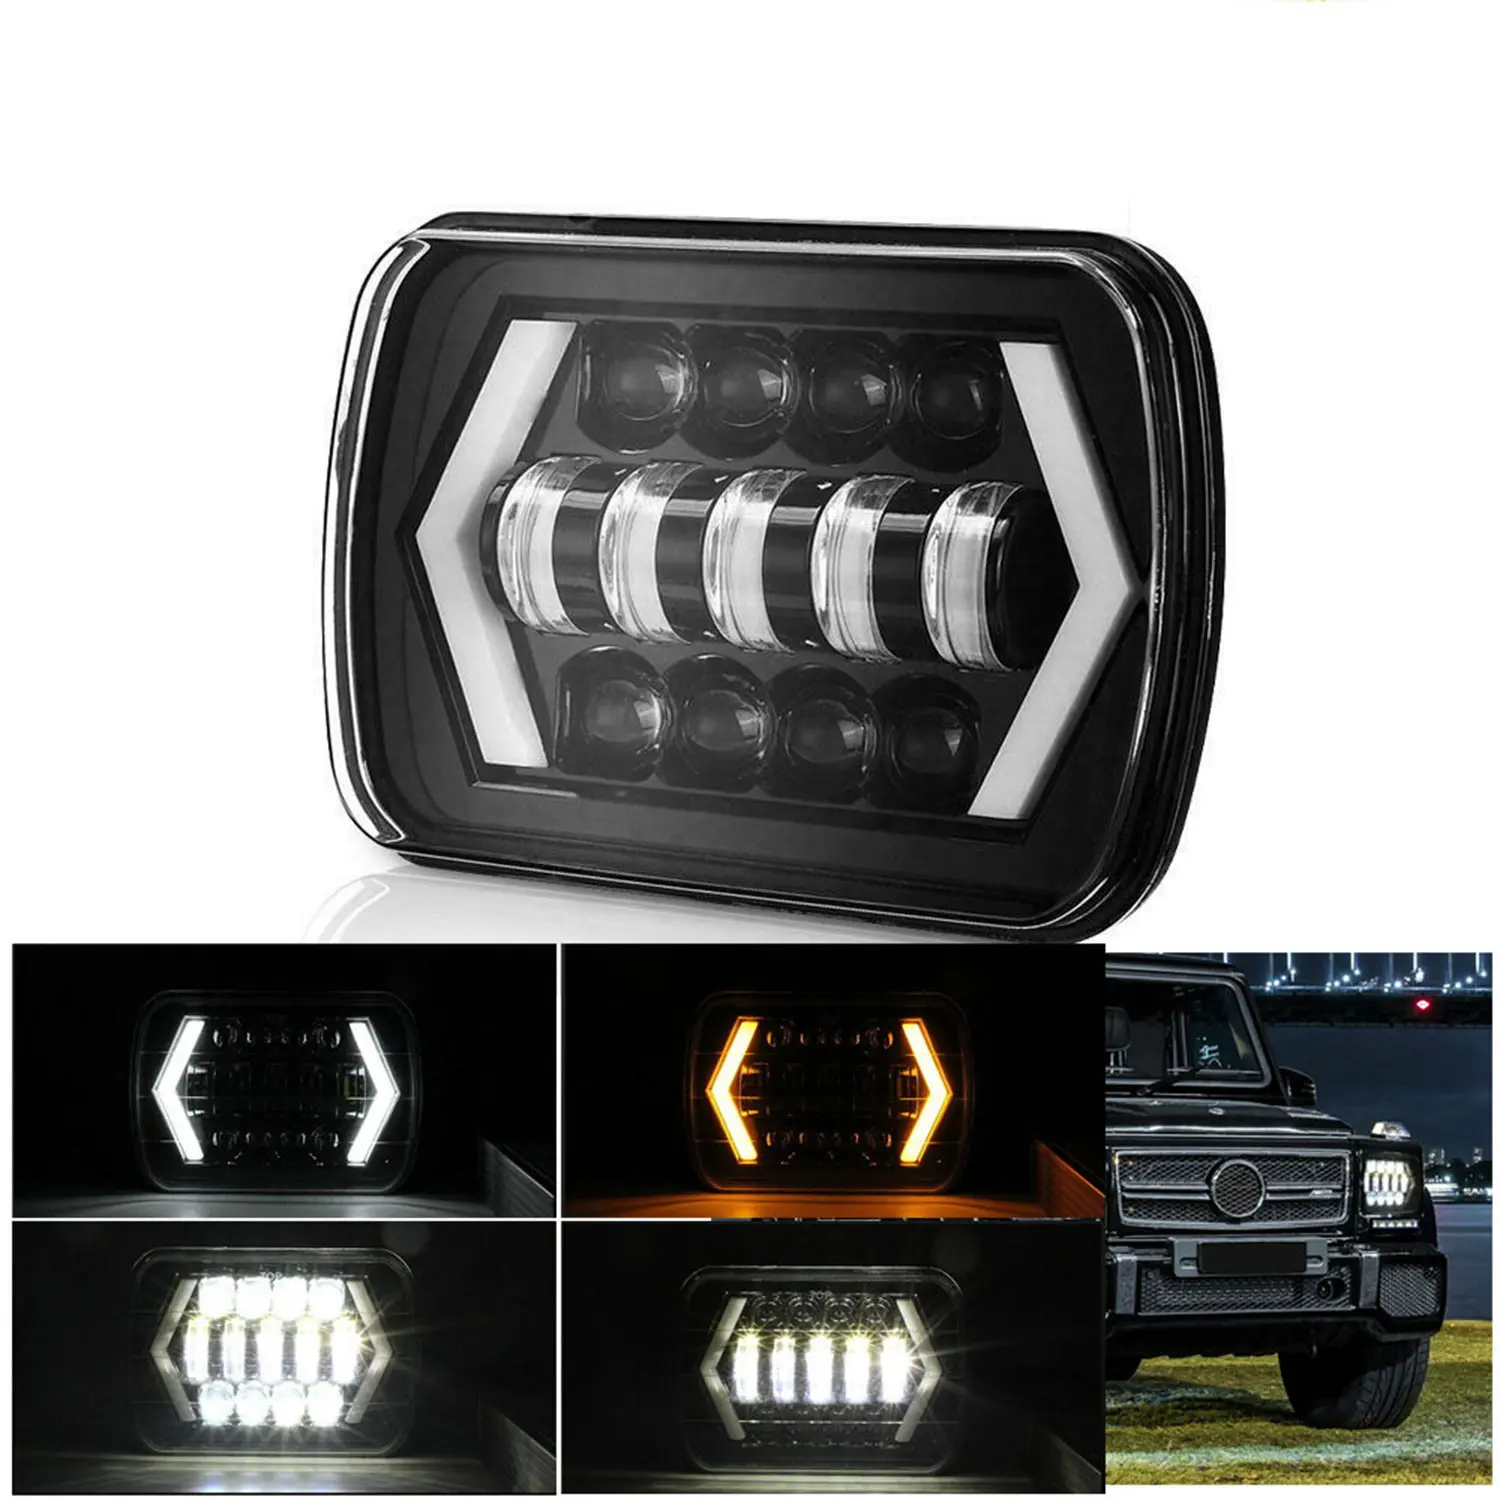 HYNBYZJ 6X5 7X6 Car LED Headlight Hi-Lo Beam DRL Square Turn Signal Light For Jeep Cherokee XJ Wrangler YJ For GMC/Ford images - 6